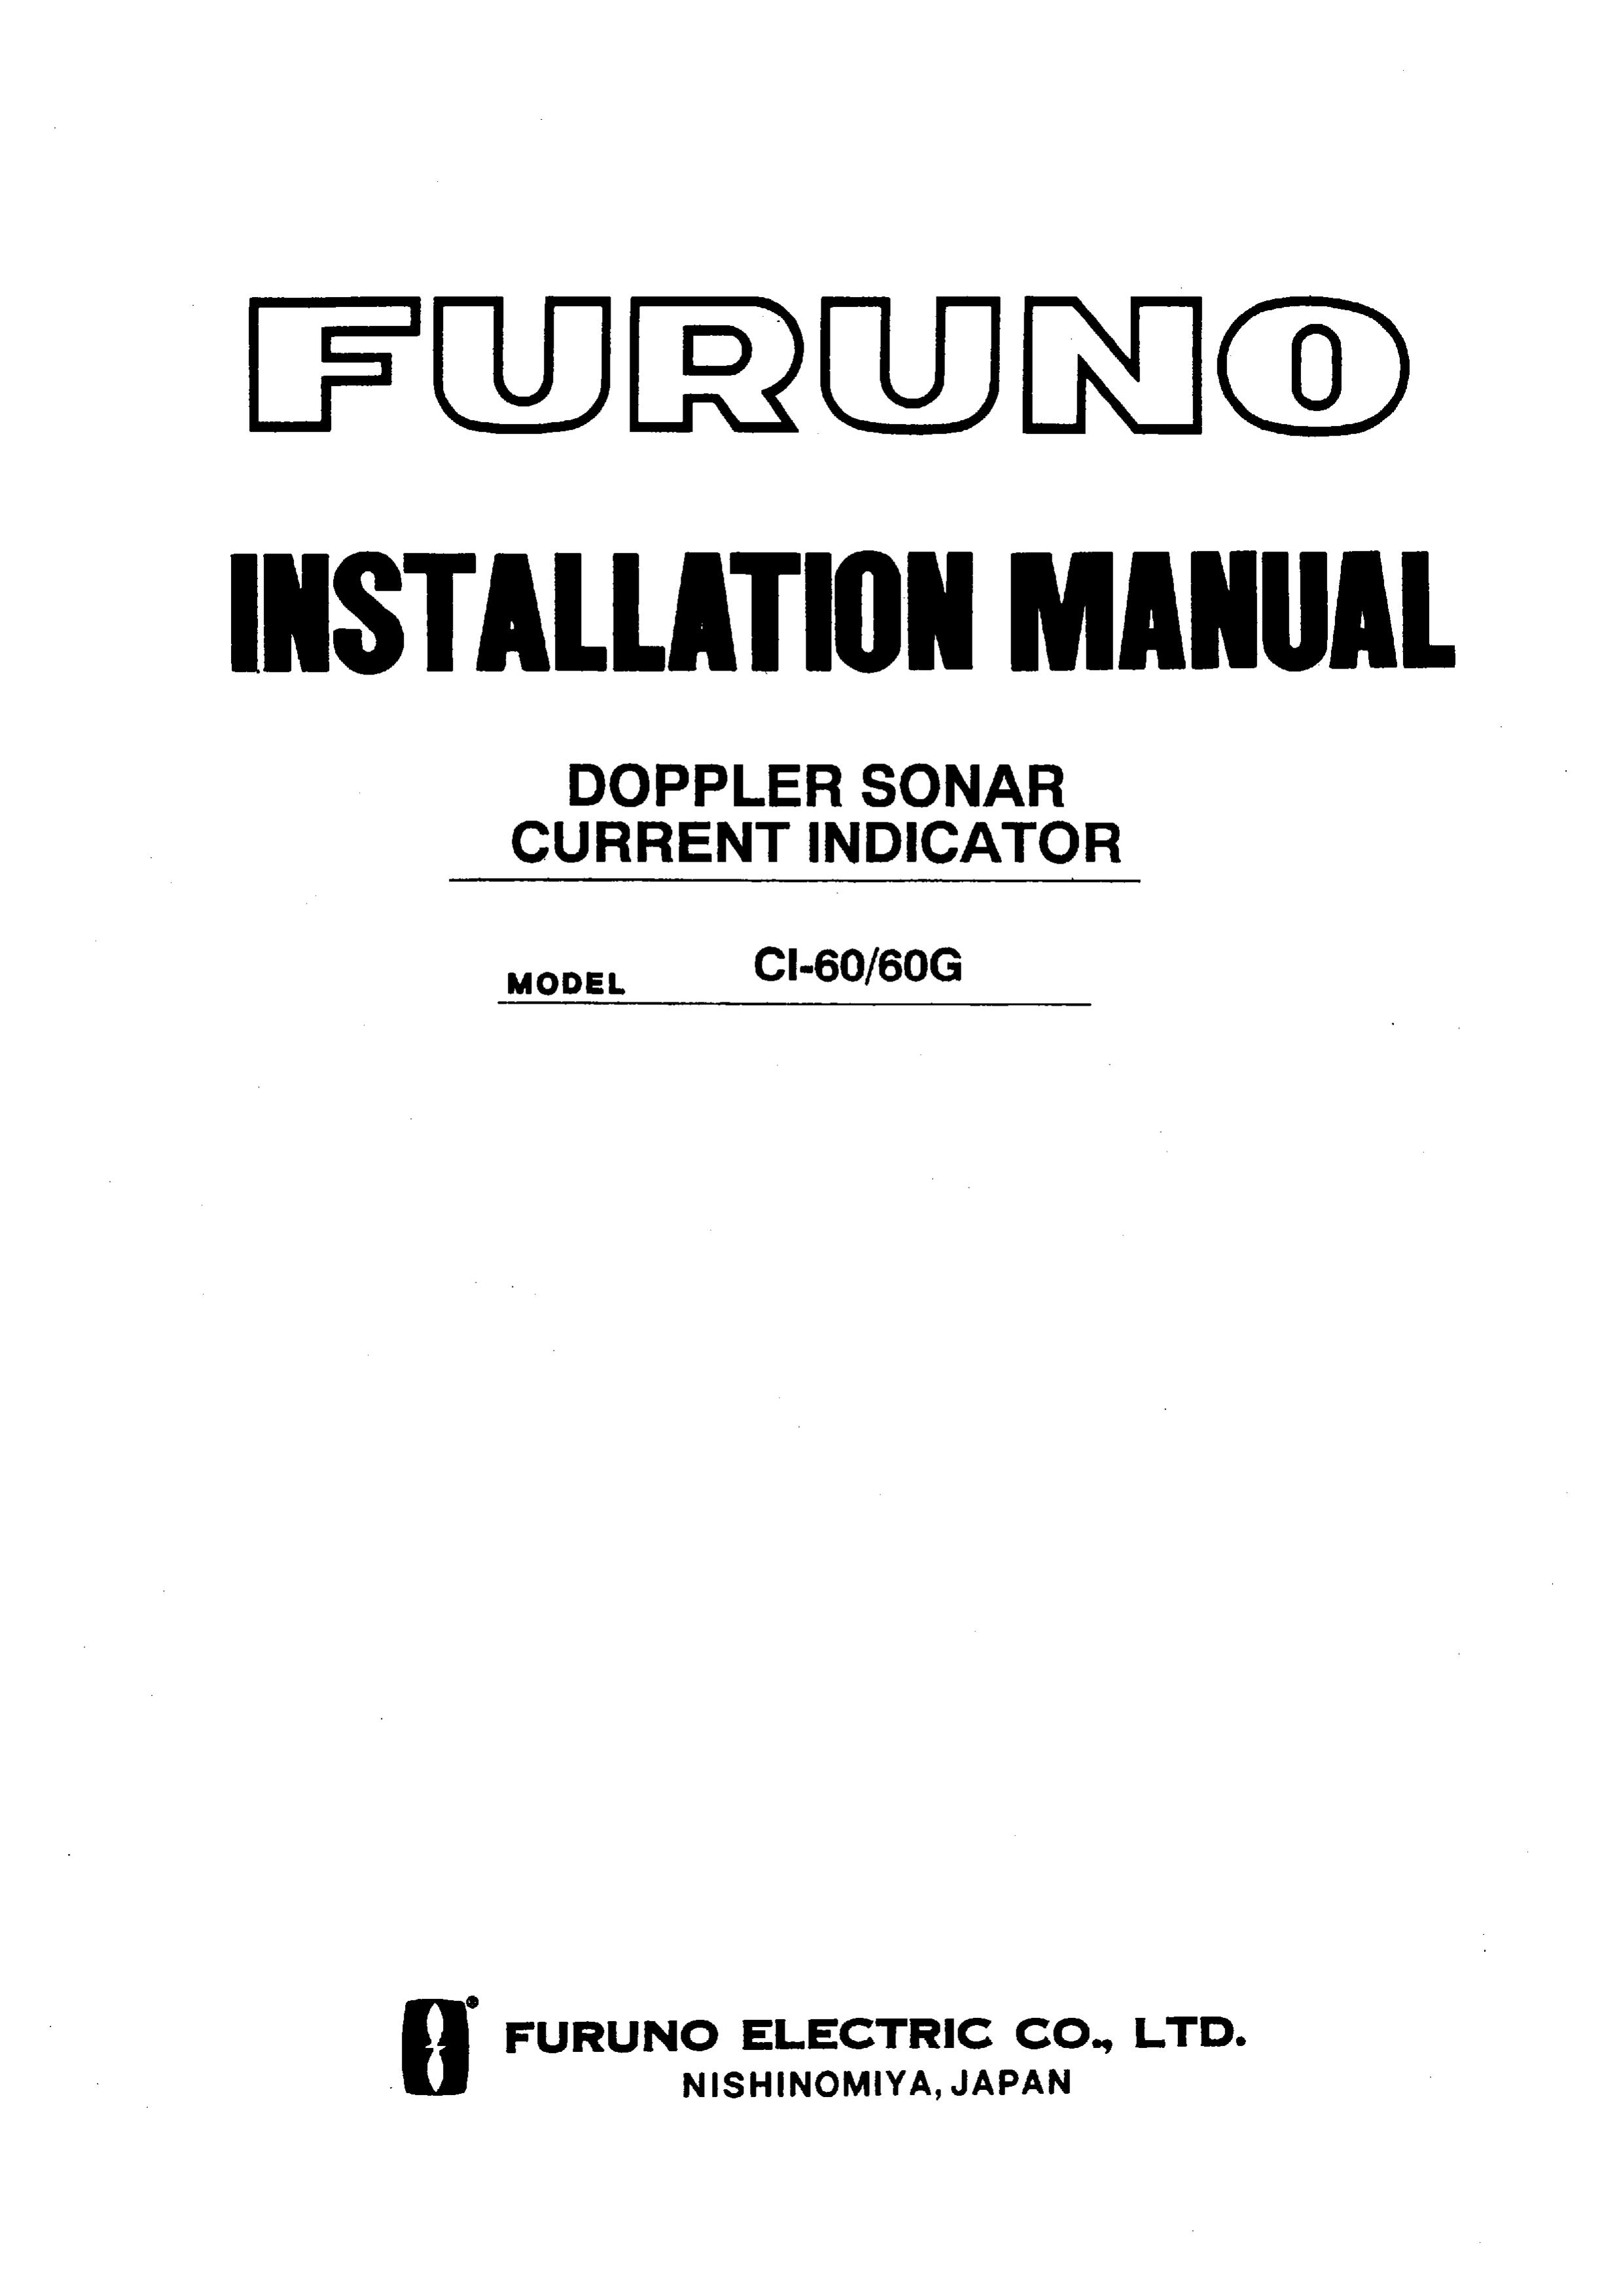 Furuno ci60 SONAR User Manual